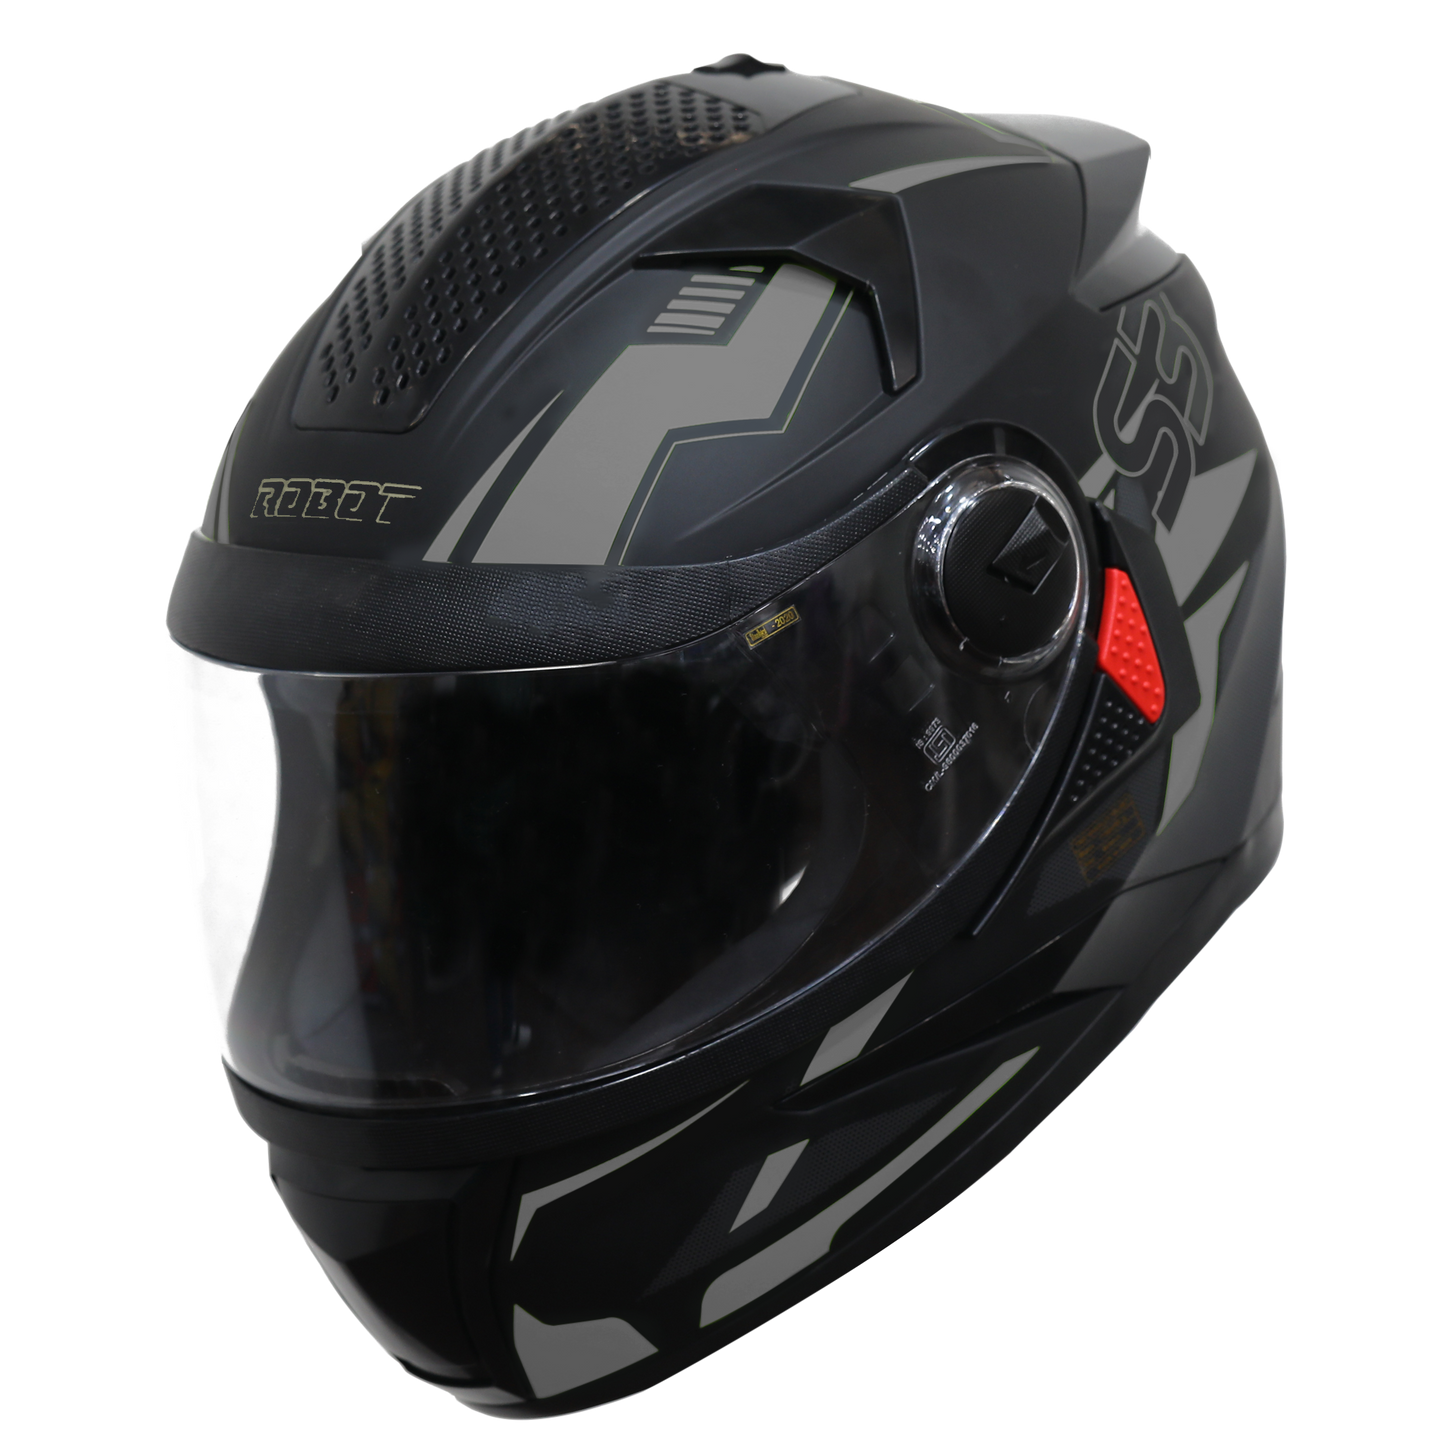 Steelbird SBH-17 Terminator ISI Certified Full Face Graphic Helmet (Matt Black Grey with Clear Visor)